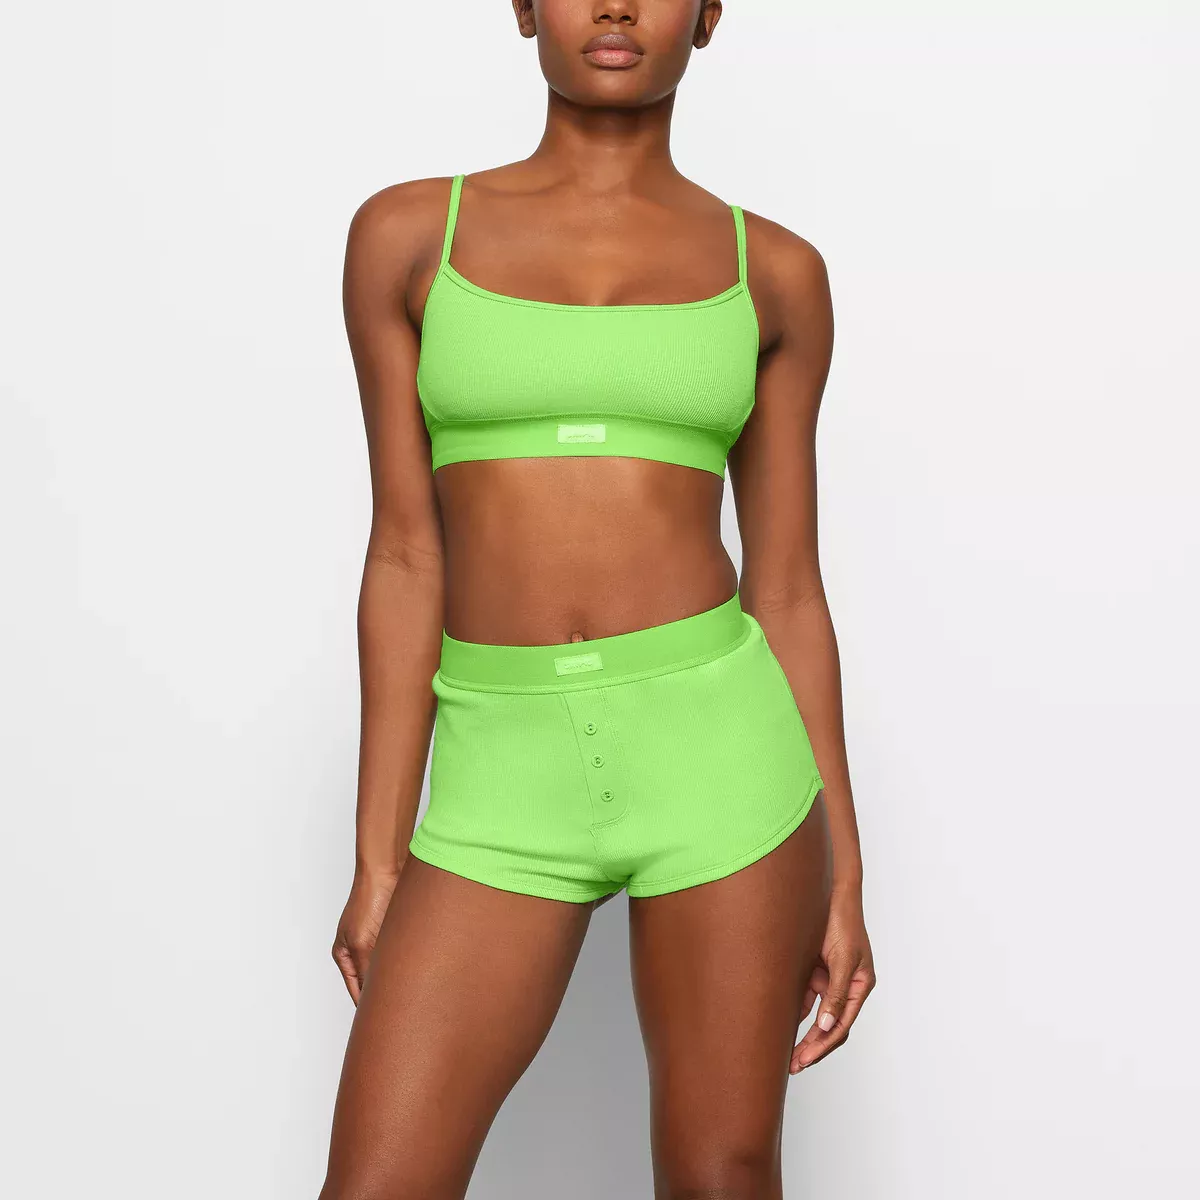 Discount SKIMS Bras Promotions - Cotton Rib Scoop Bralette Womens Neon Green